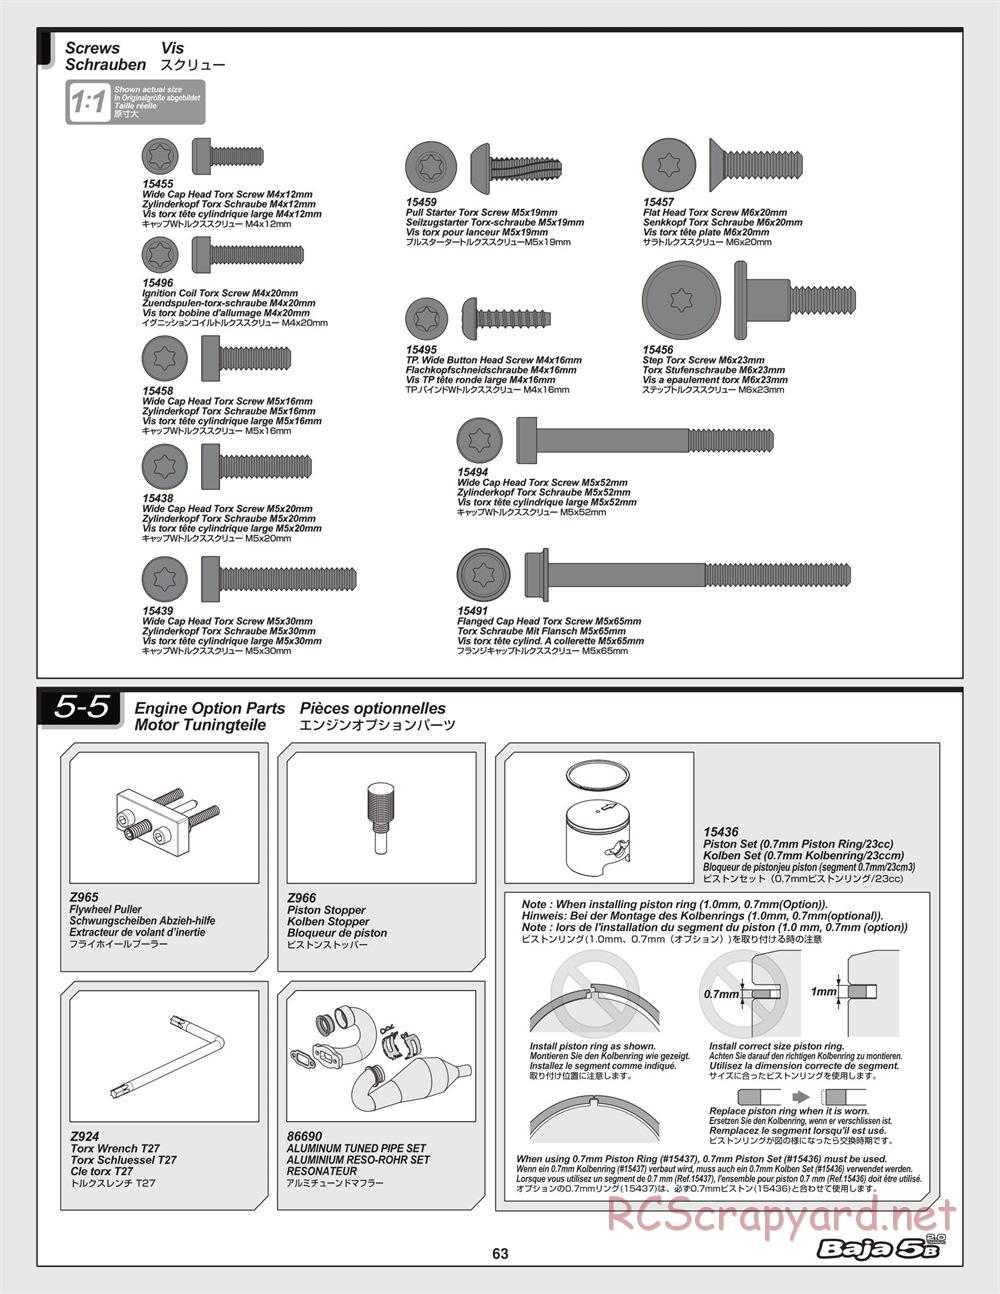 HPI - Baja 5B 2.0 - Manual - Page 63